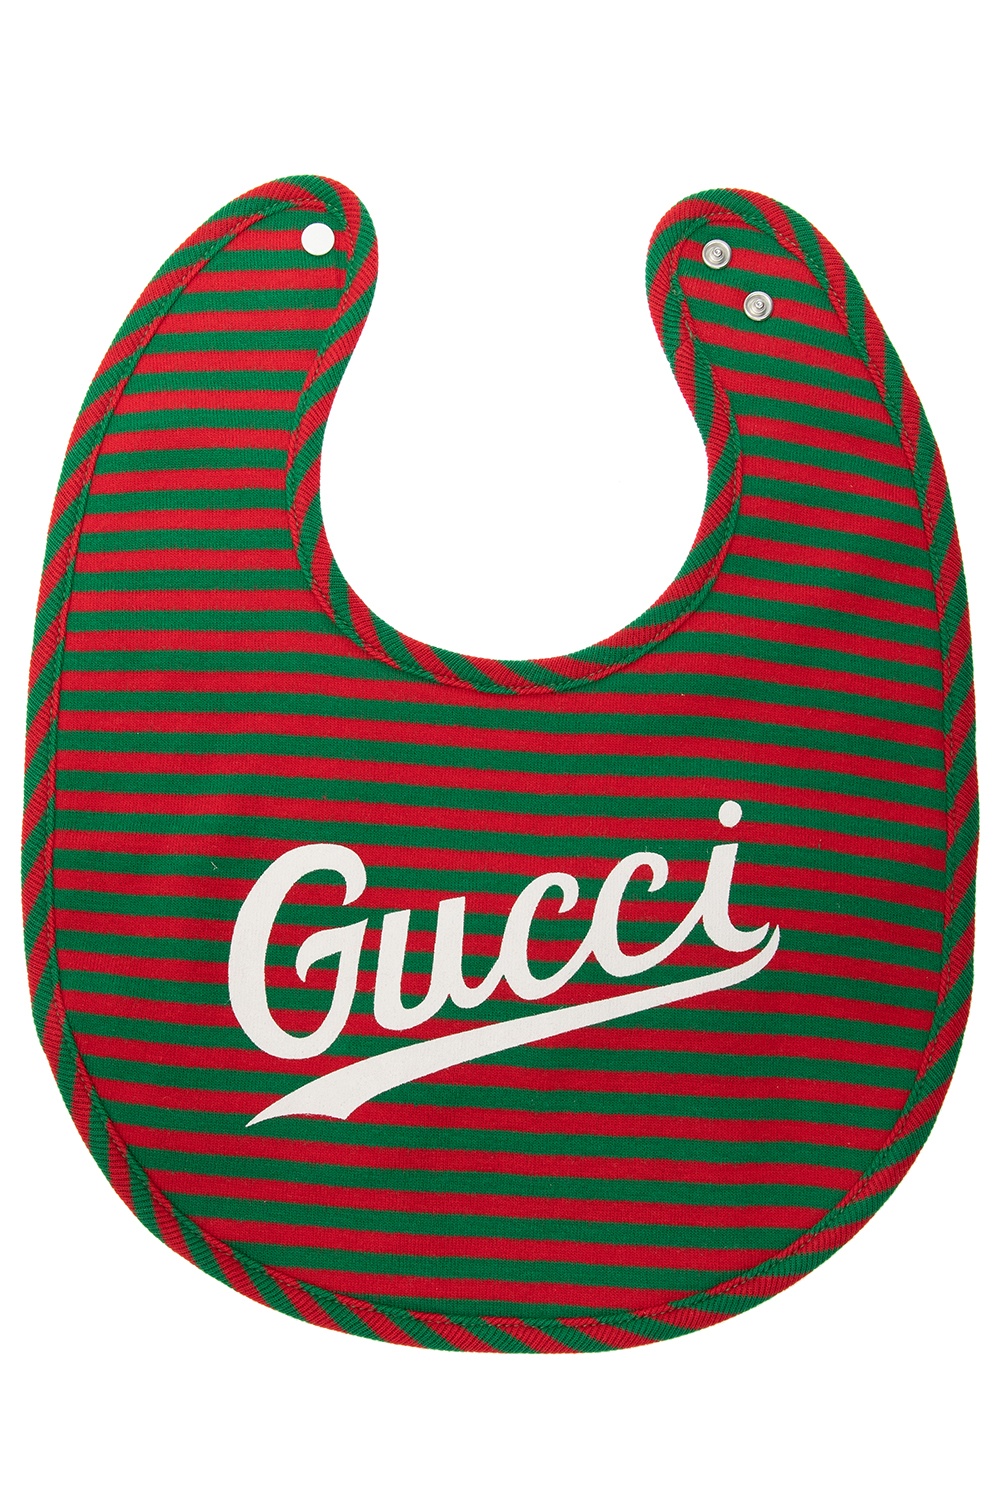 Gucci Kids GUCCI Rhyton Hawaii Chunky Sneakers Shoes 631708-DRW00-9522